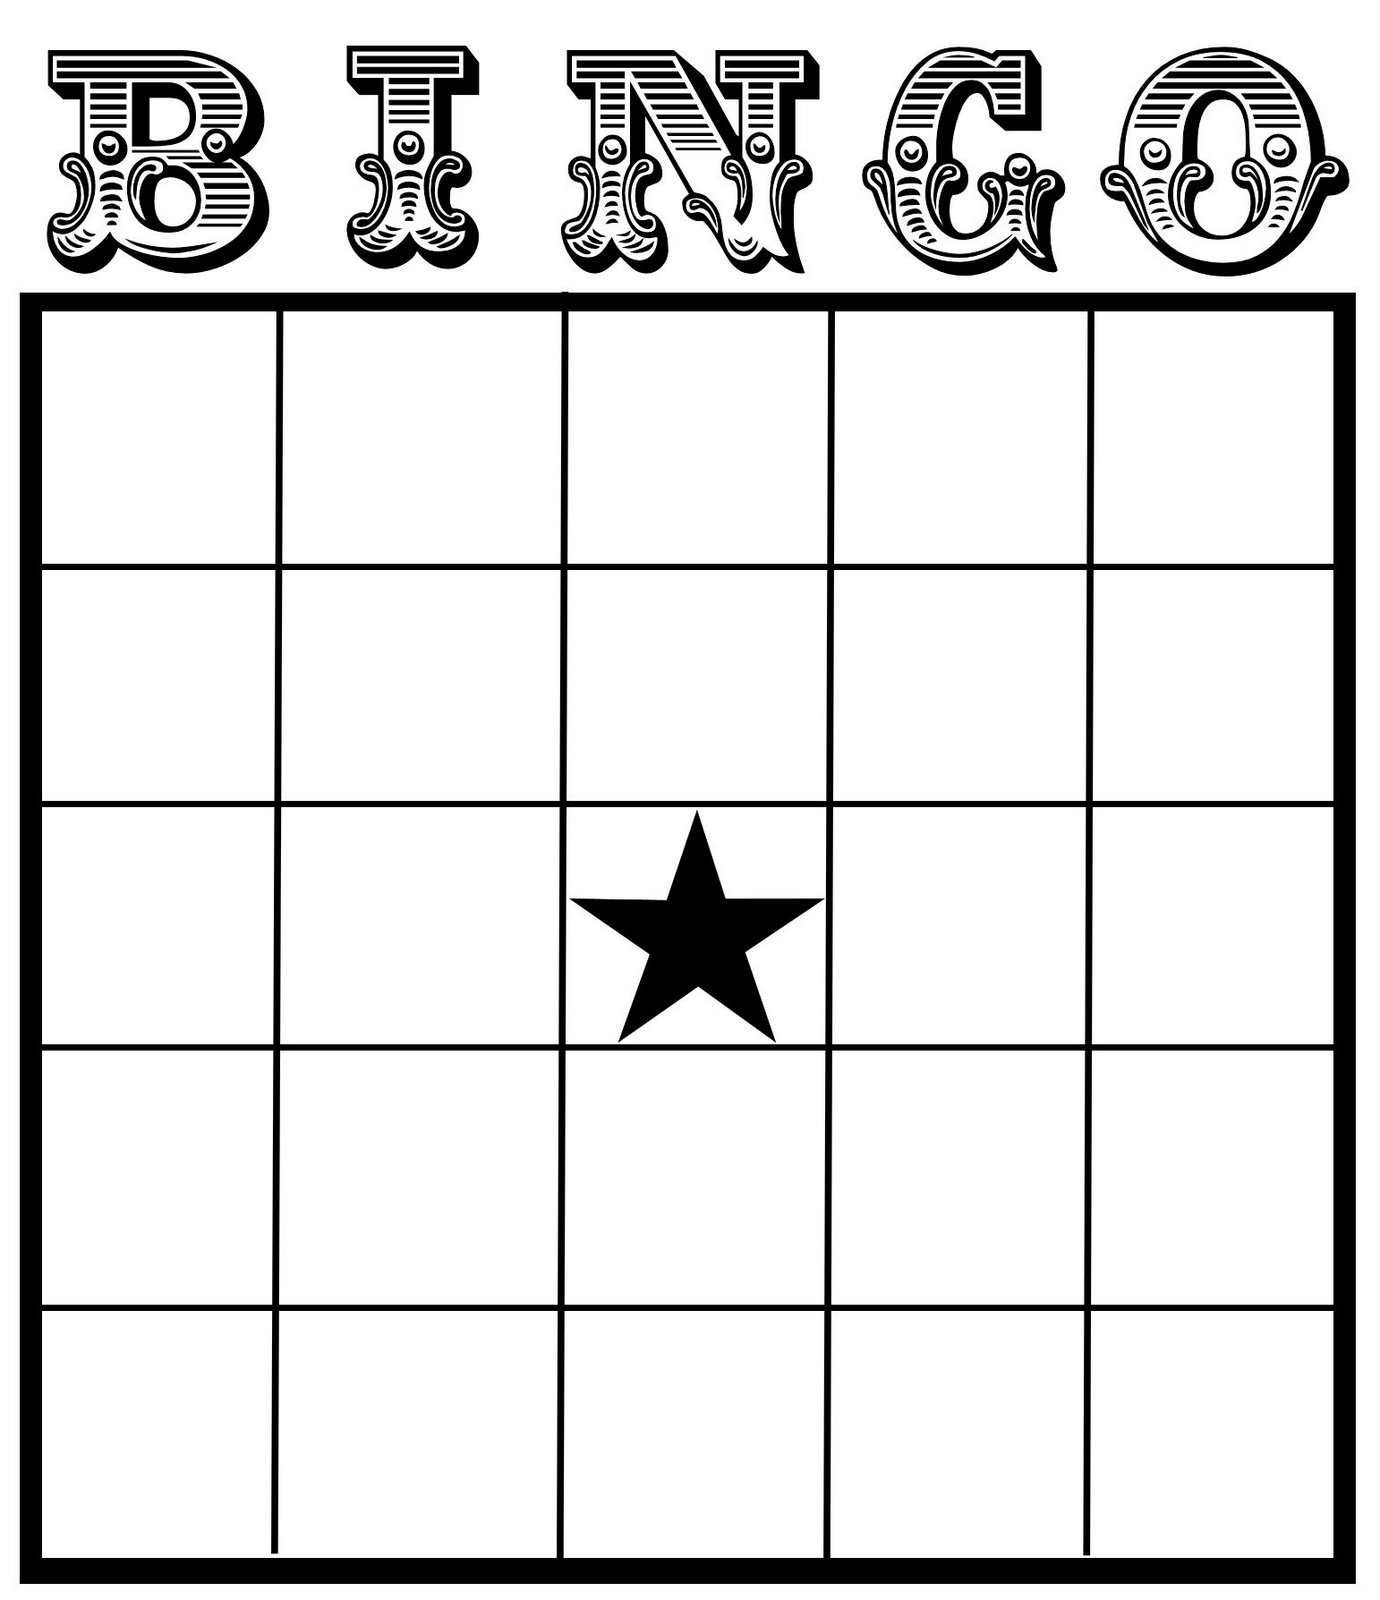 How To Make Random Bingo Cards In Excel